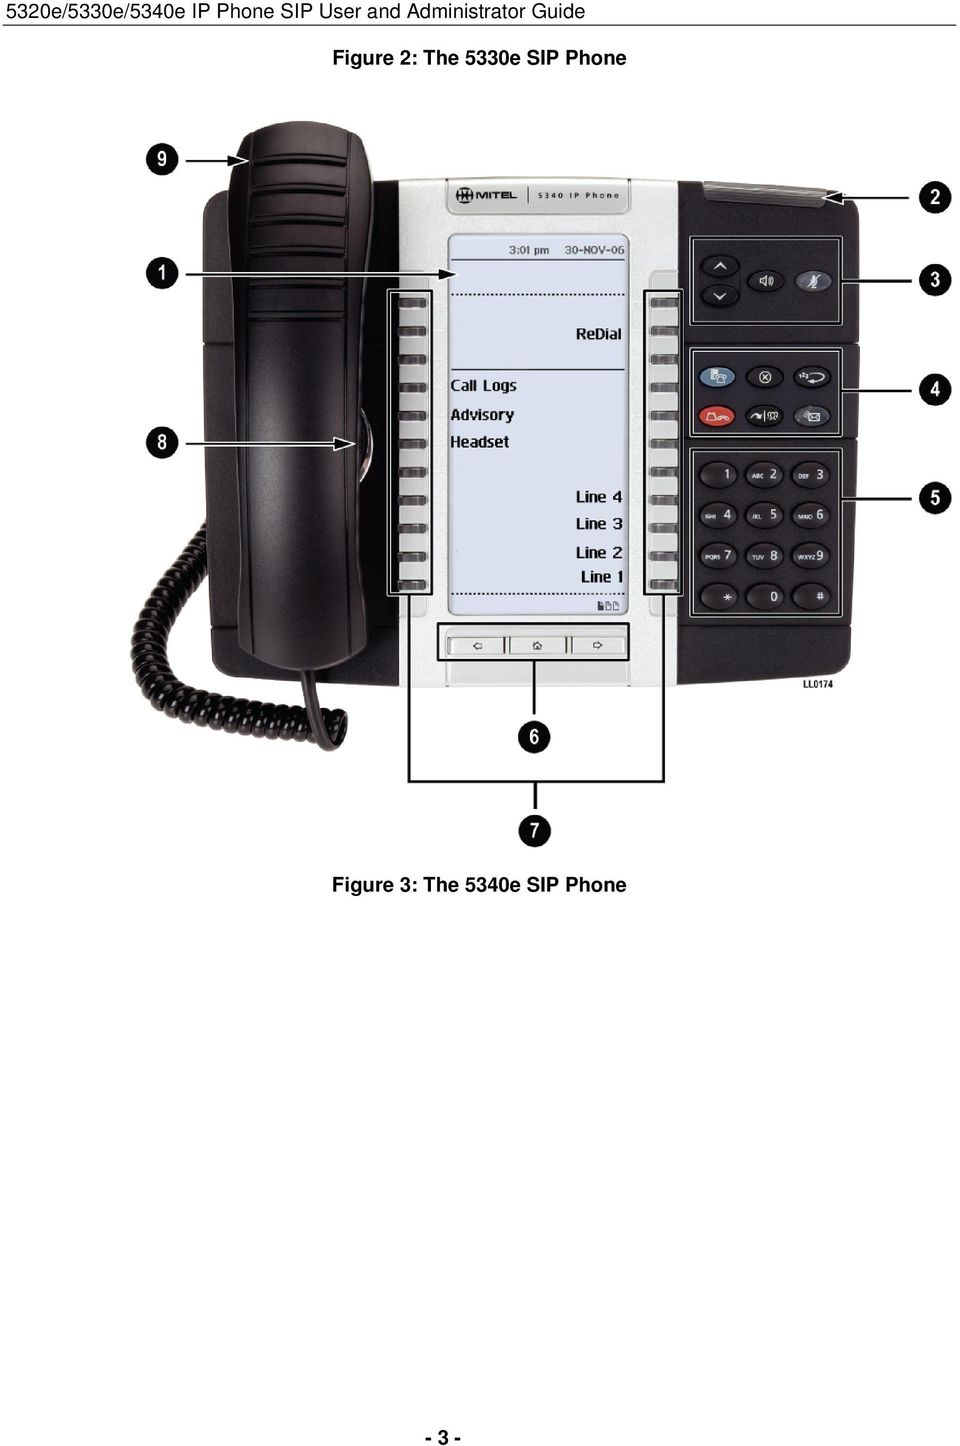 Figure 2: The 5330e SIP Phone